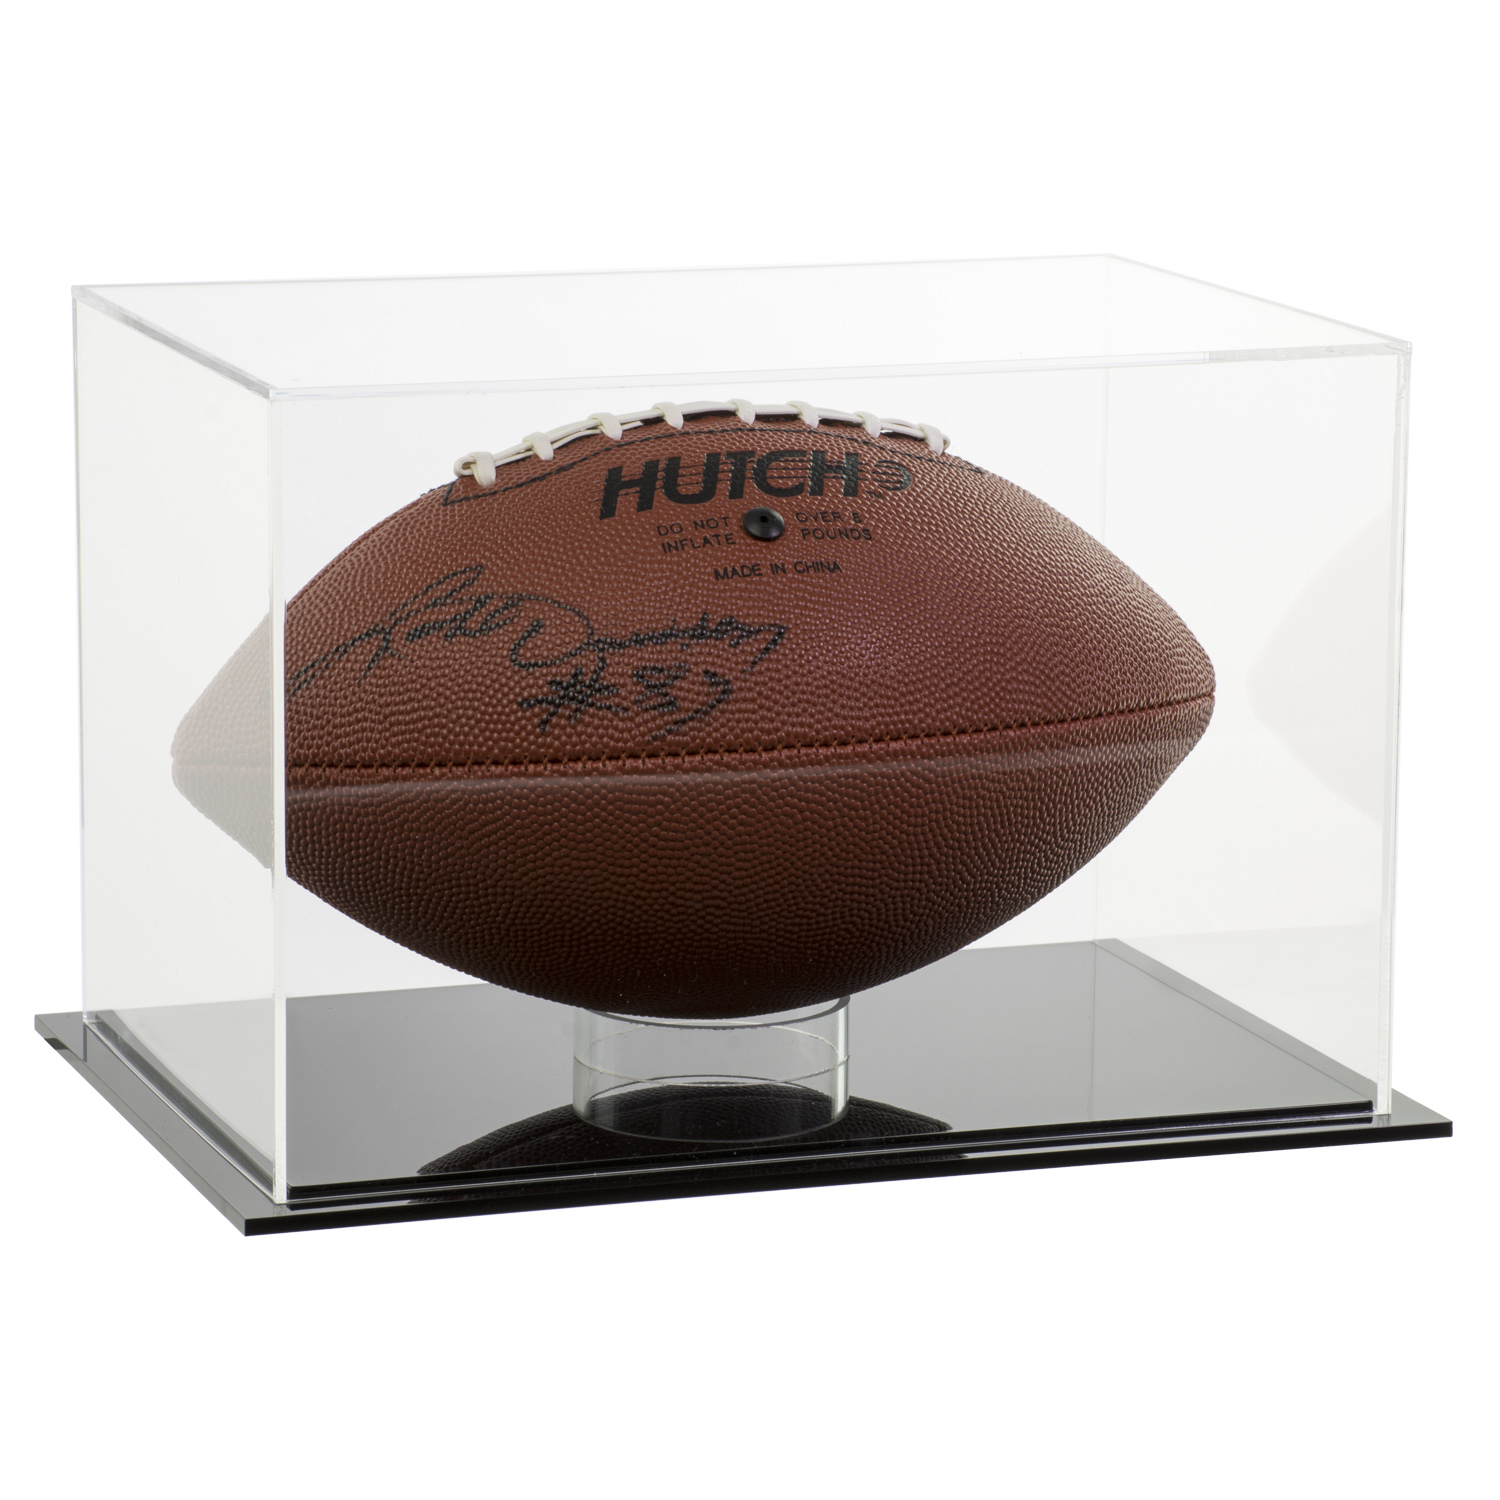 Acrylic Football Display Case Buy Acrylic Displays